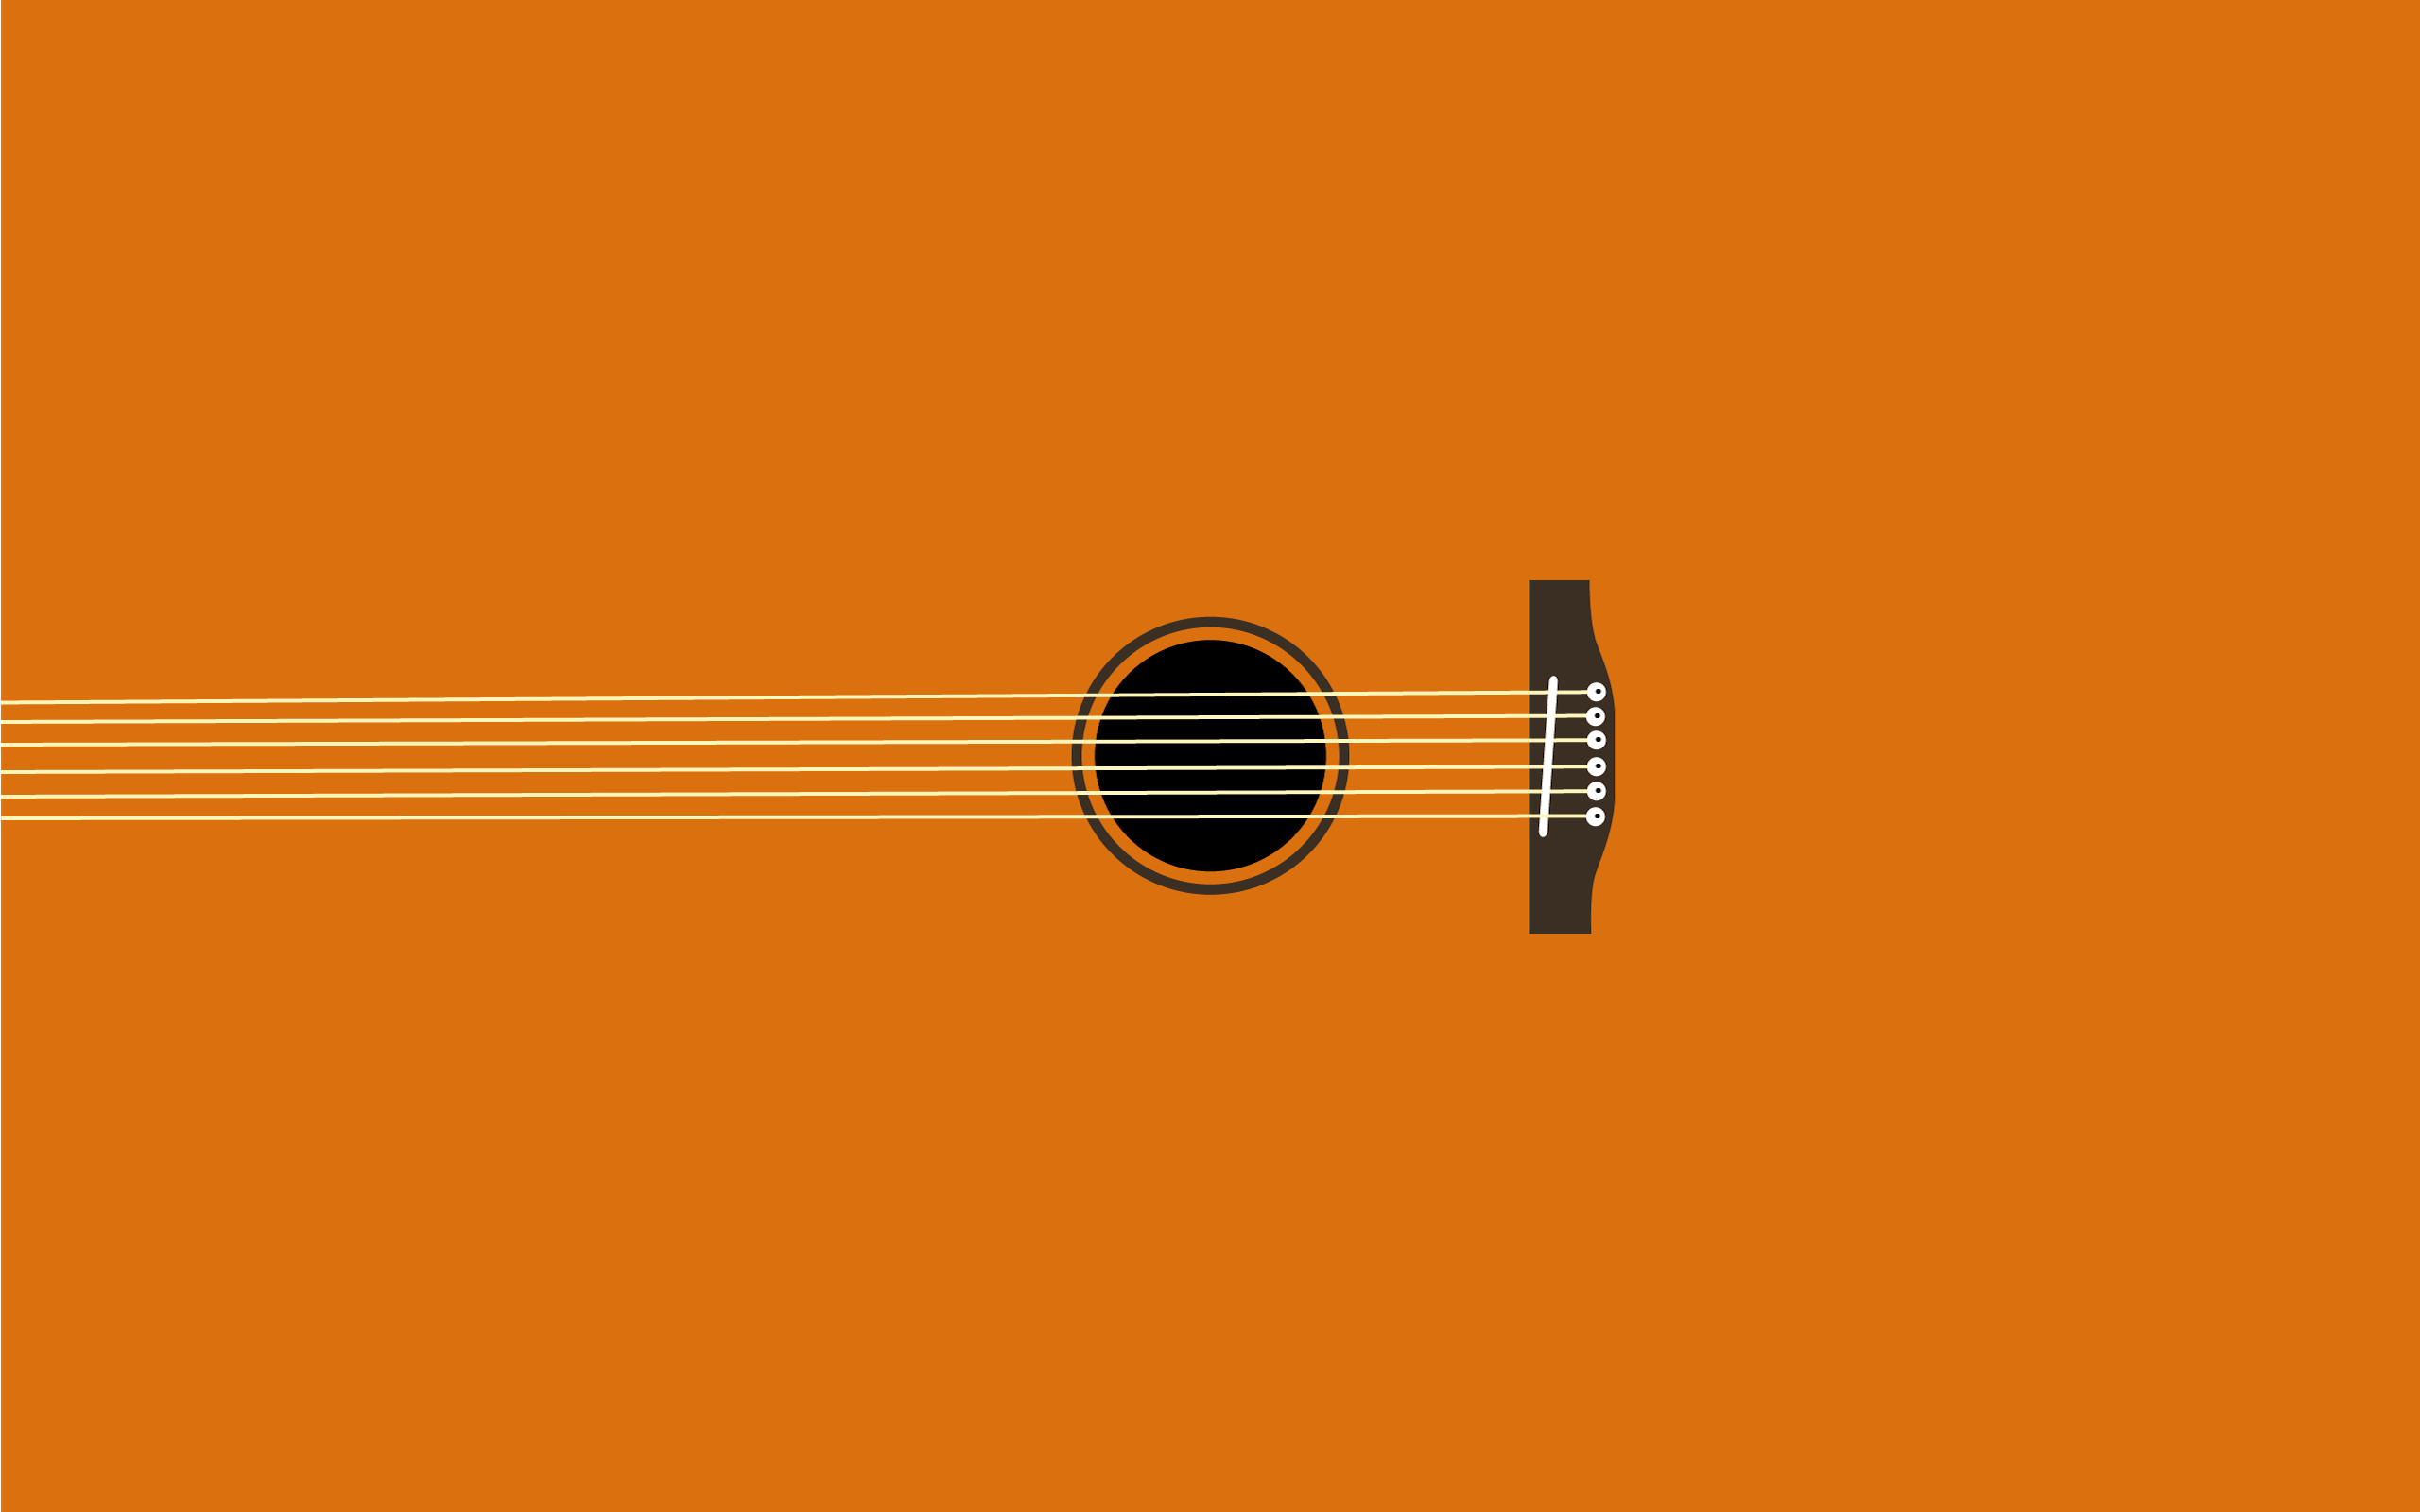 General 2560x1600 minimalism digital art guitar music musical instrument orange background simple background